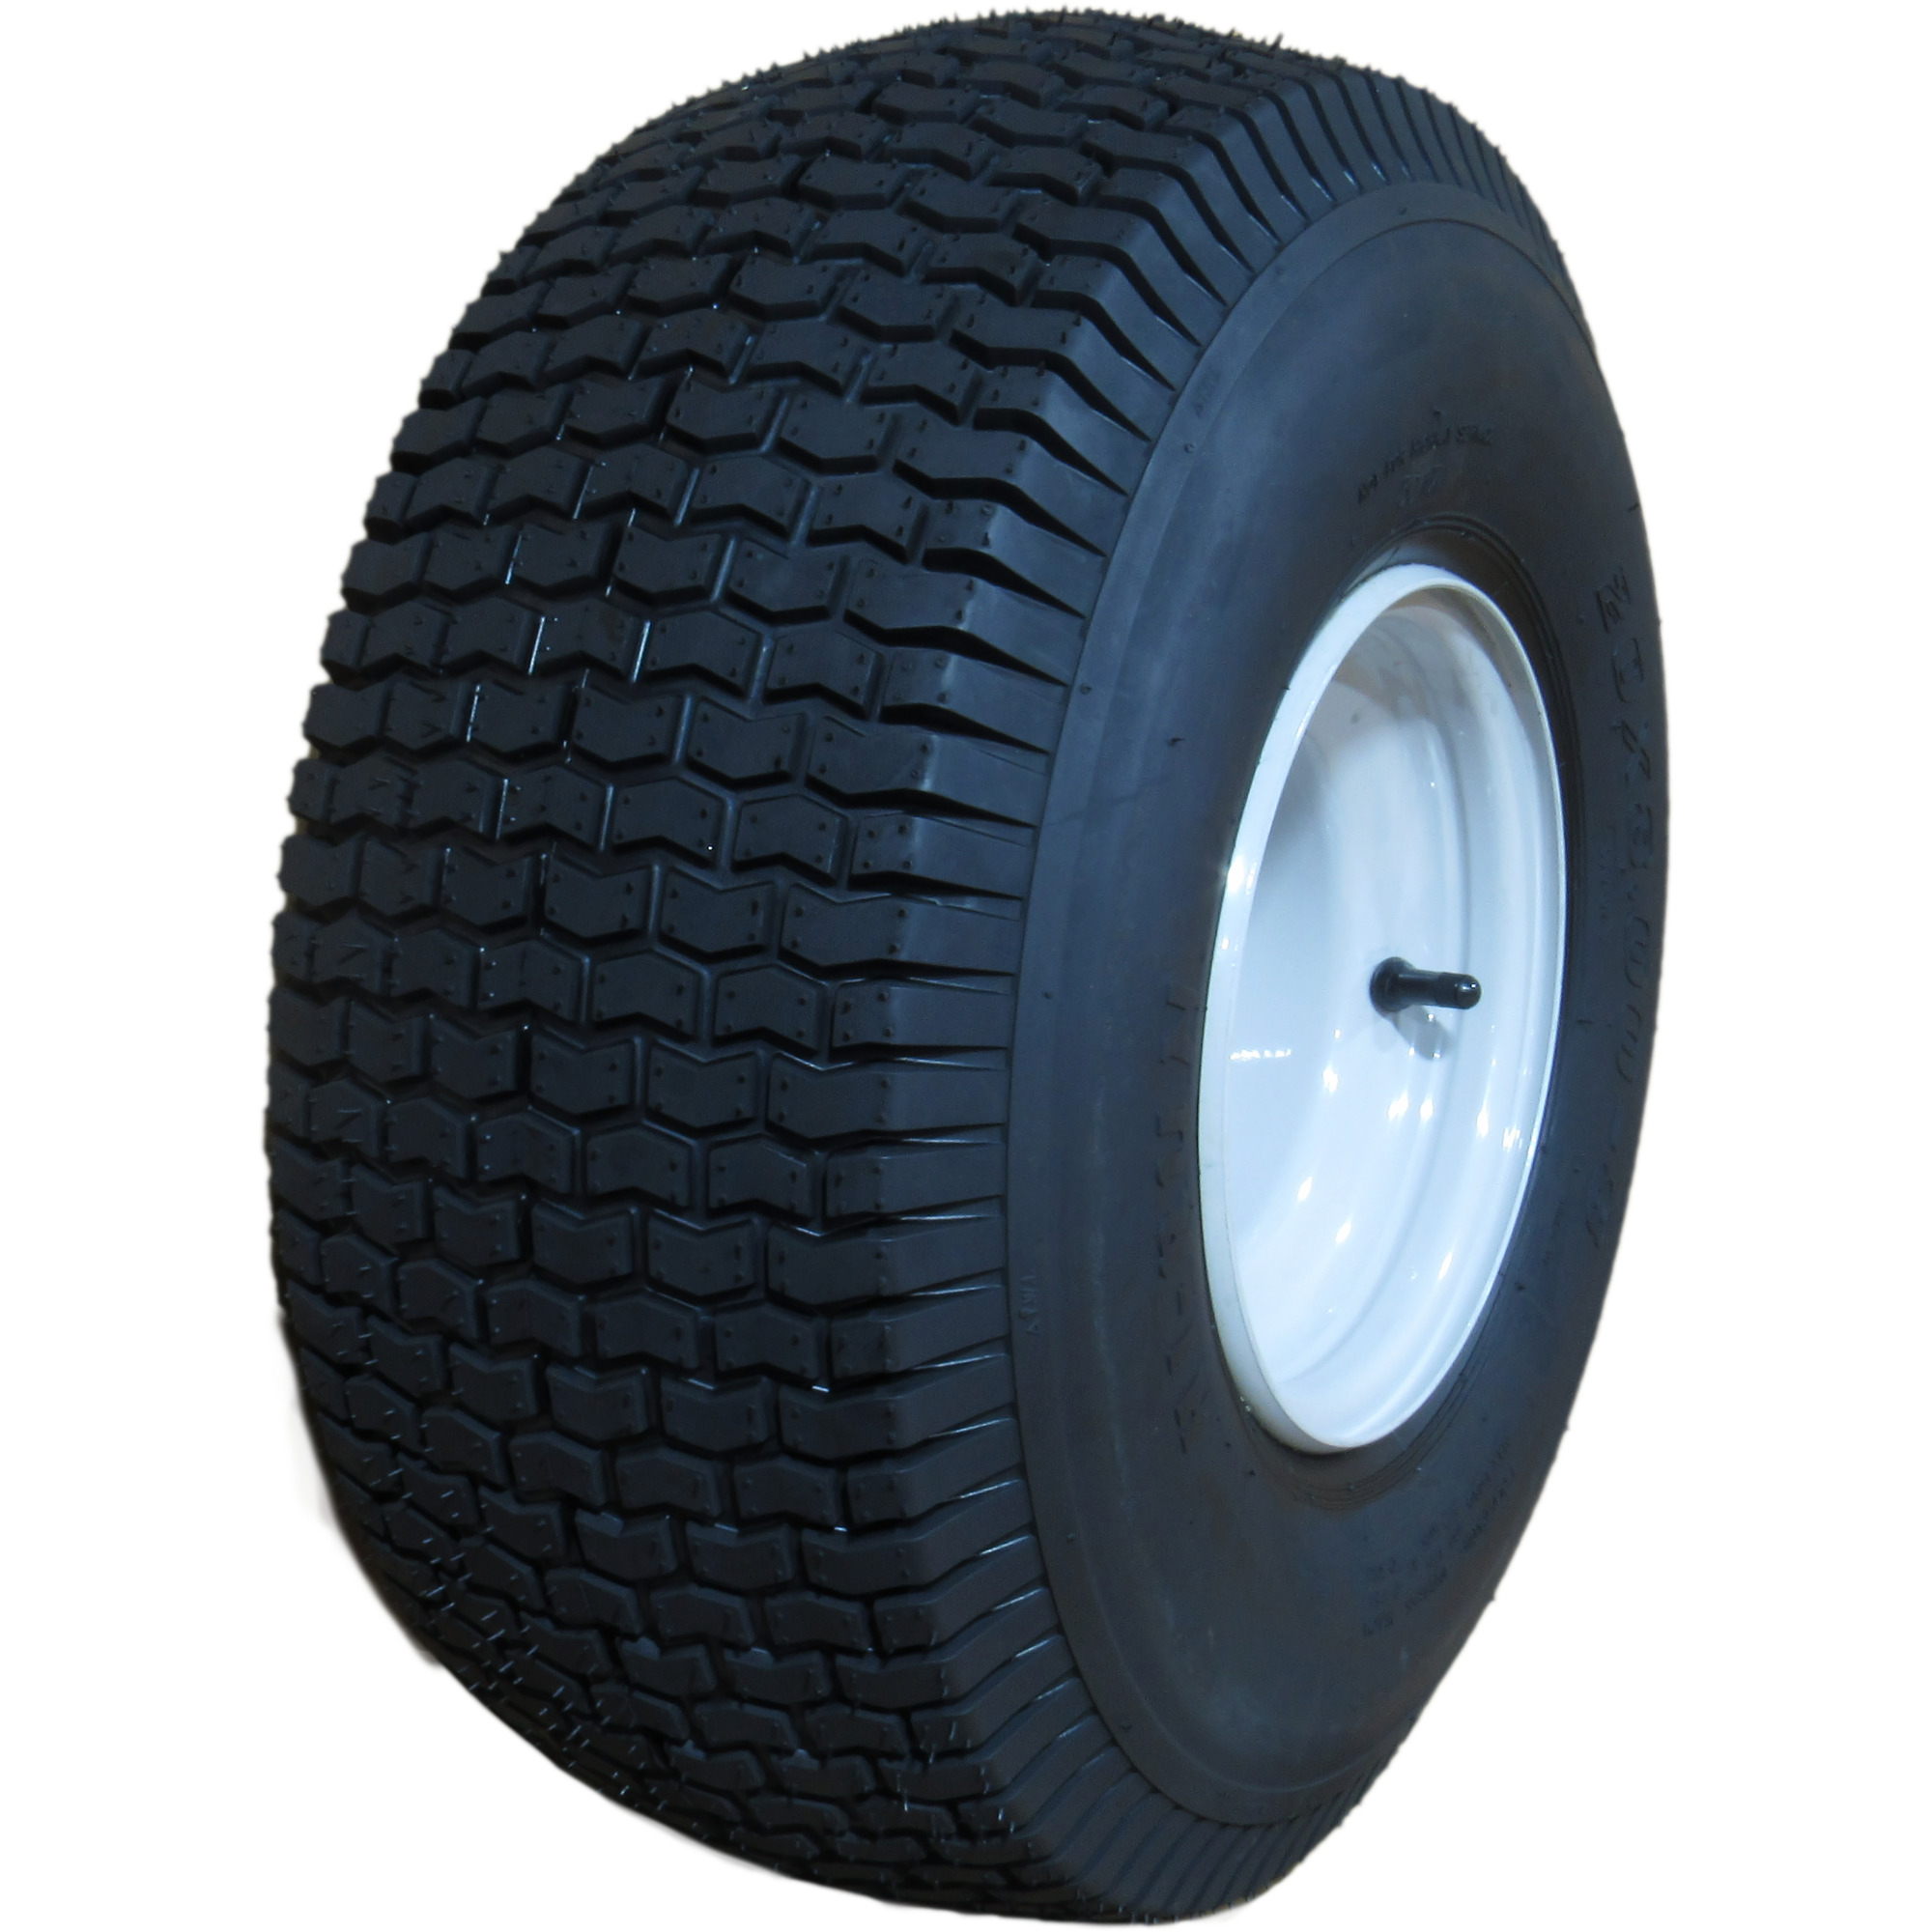 HI-RUN, Lawn Garden Tire Assembly, SU12 Turf II, 3/4InchID, Tire Size 20X8.00-8 Load Range Rating A, Model ASB1089